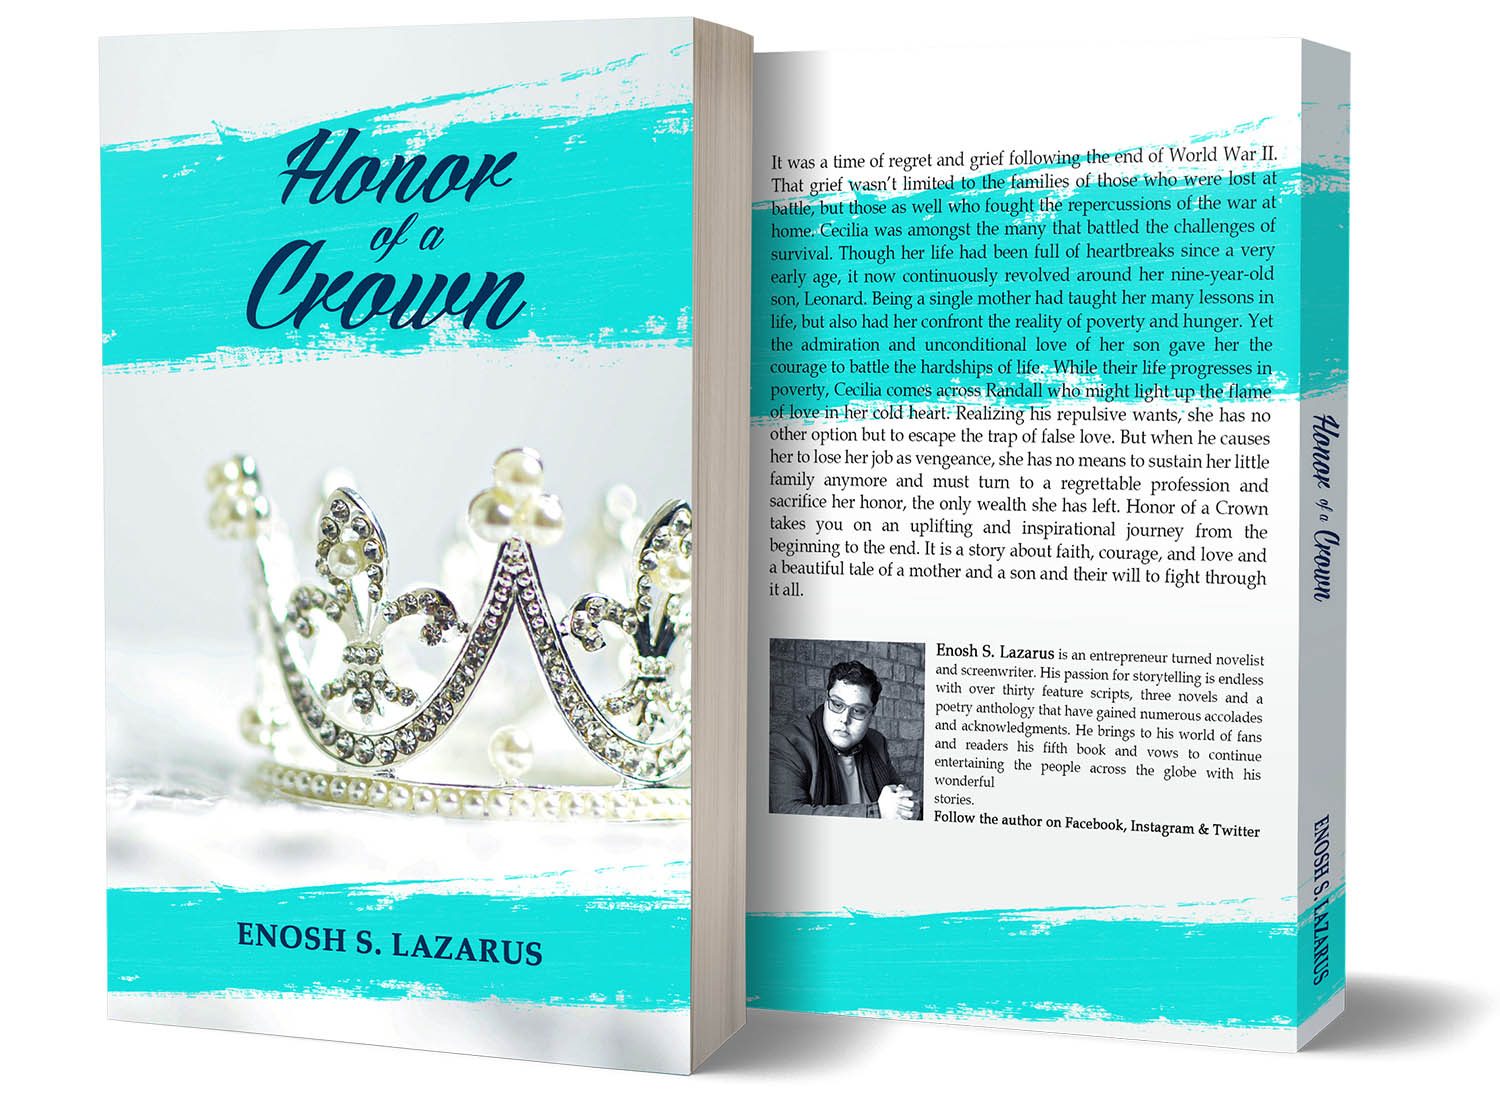 mrismailben-portfolio-Honor-of-a-Crown-paperback-bookcoverdesign